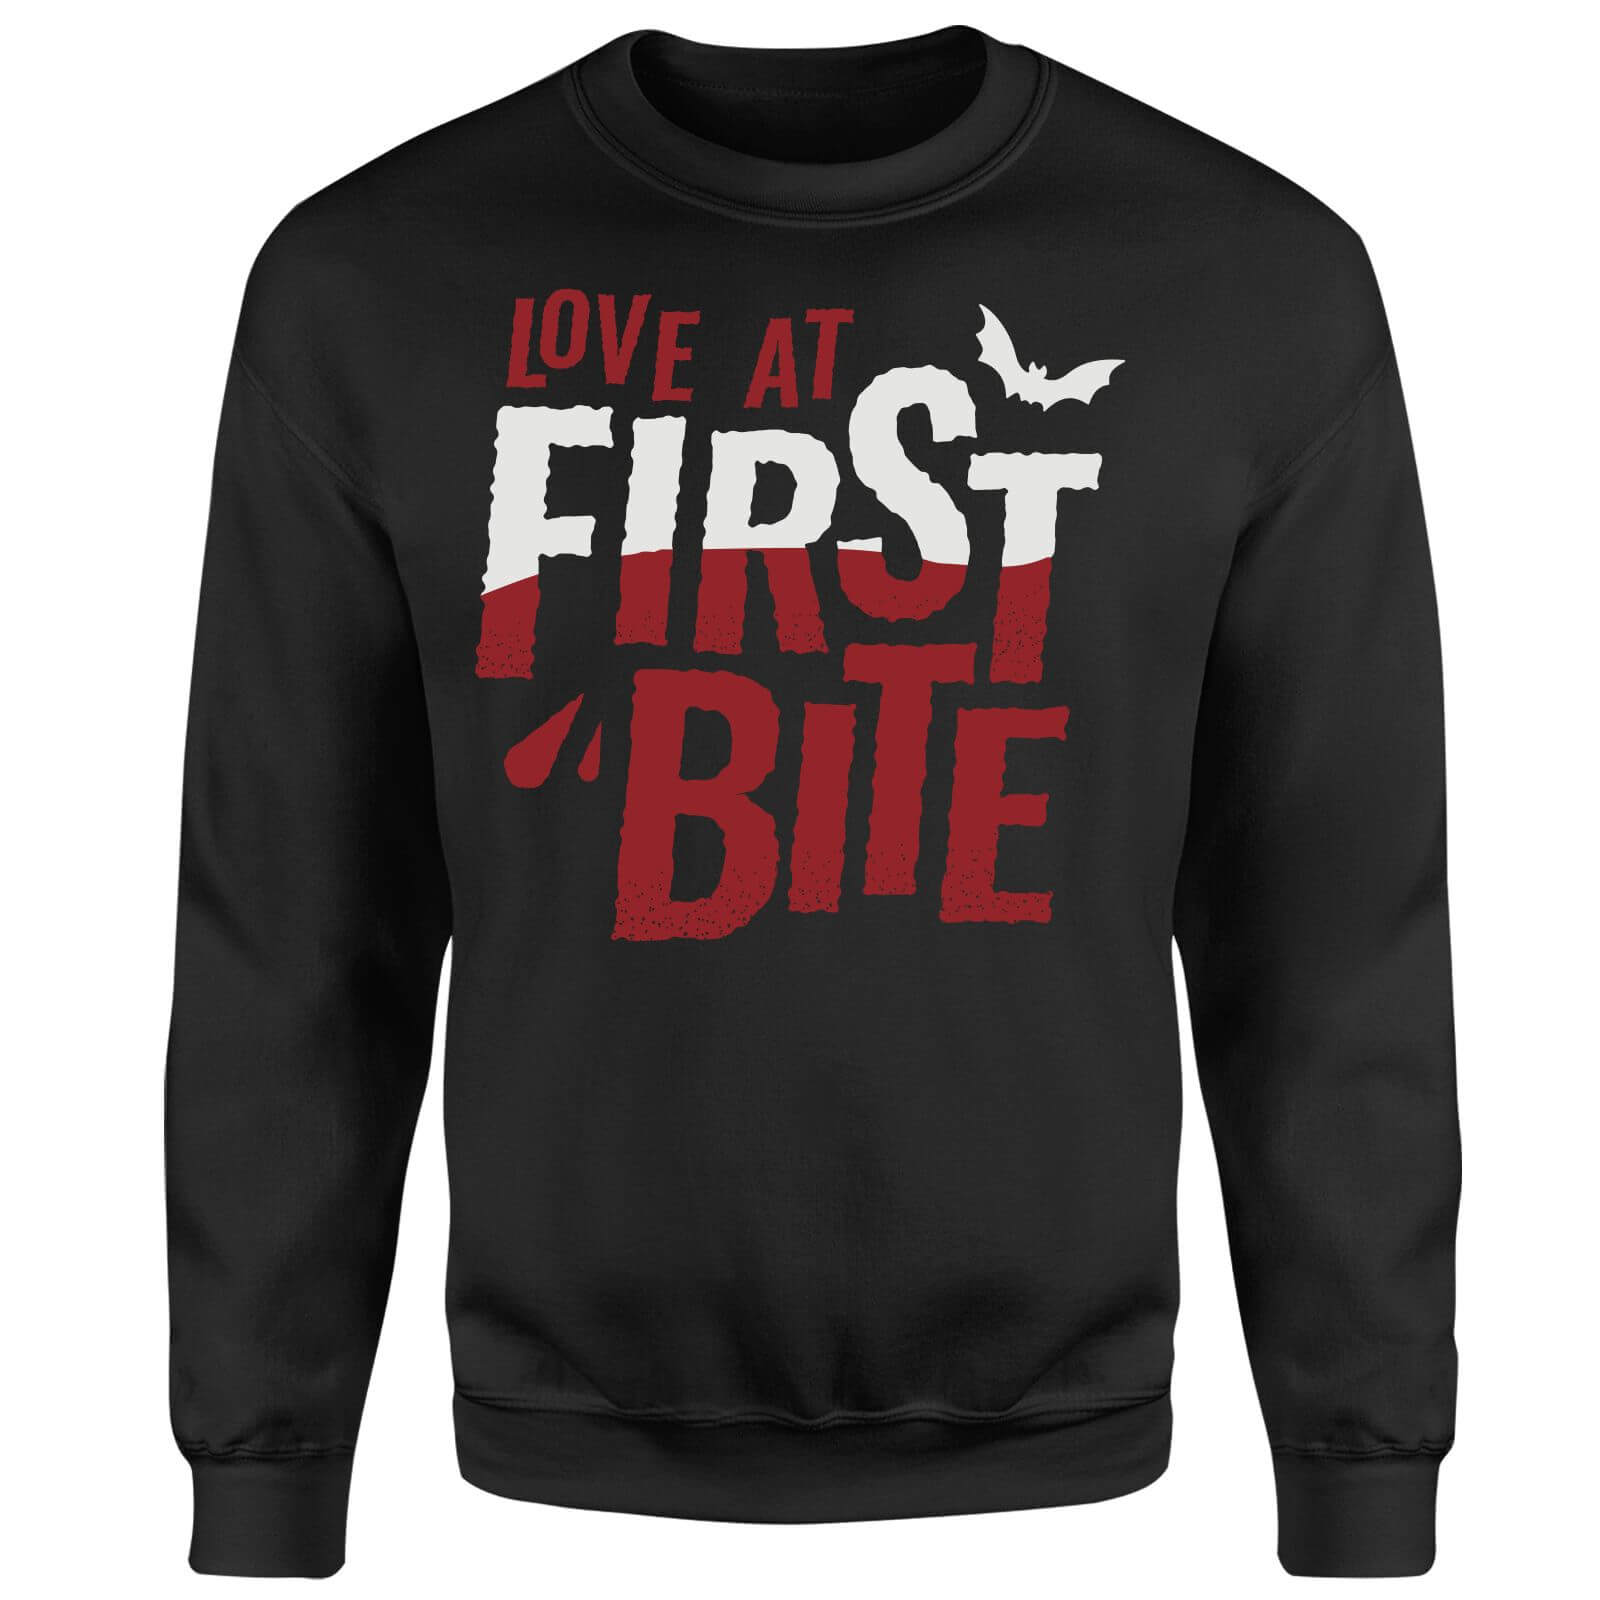 Love At First Bite Sweatshirt - Black - M - Black